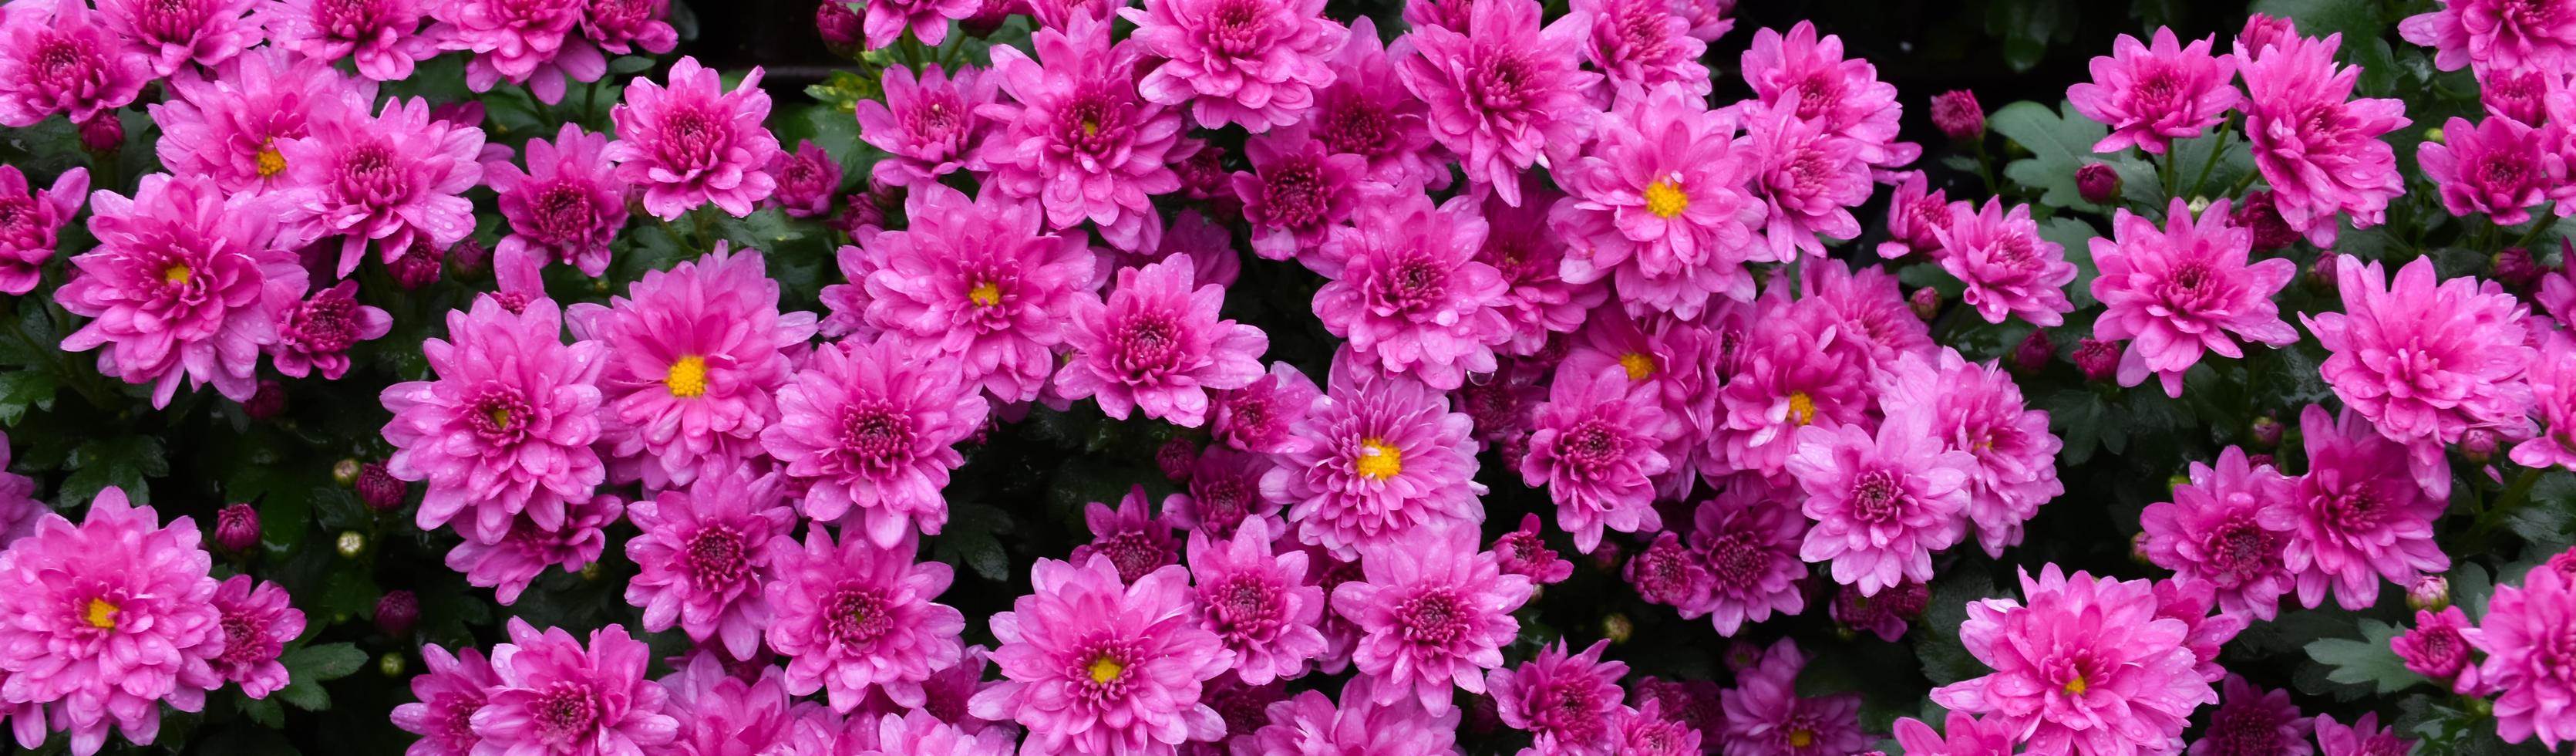 roze chrysant bloem achtergrond, zacht en selectief focus. foto